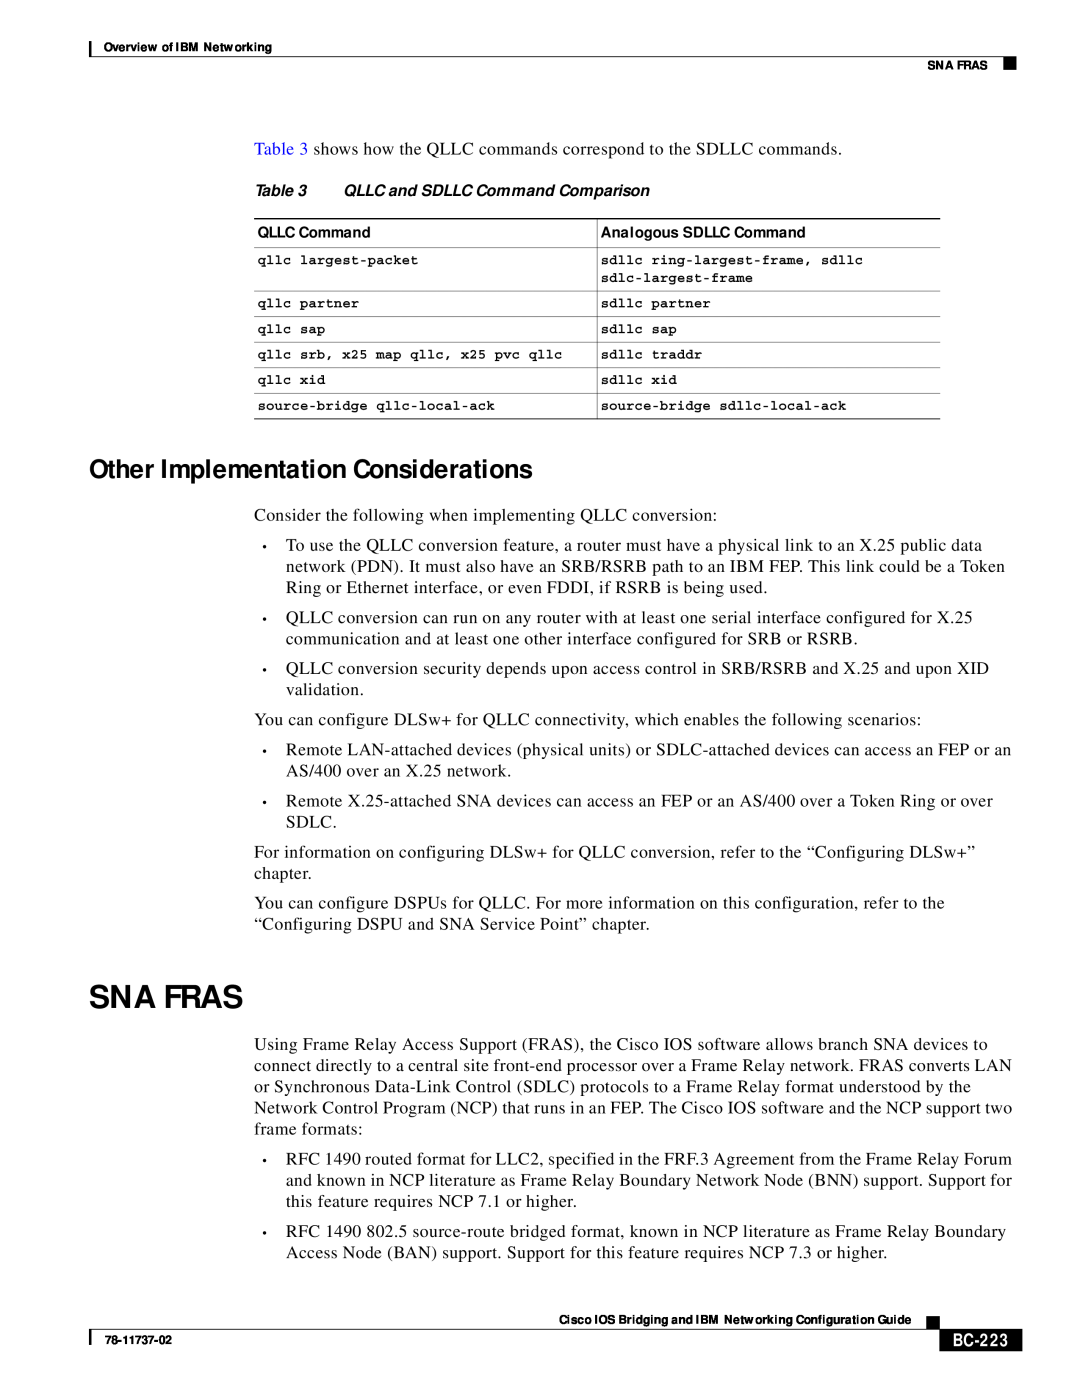 IBM BC-201 manual Sna Fras, Other Implementation Considerations, QLLC Command, Analogous SDLLC Command, BC-223 